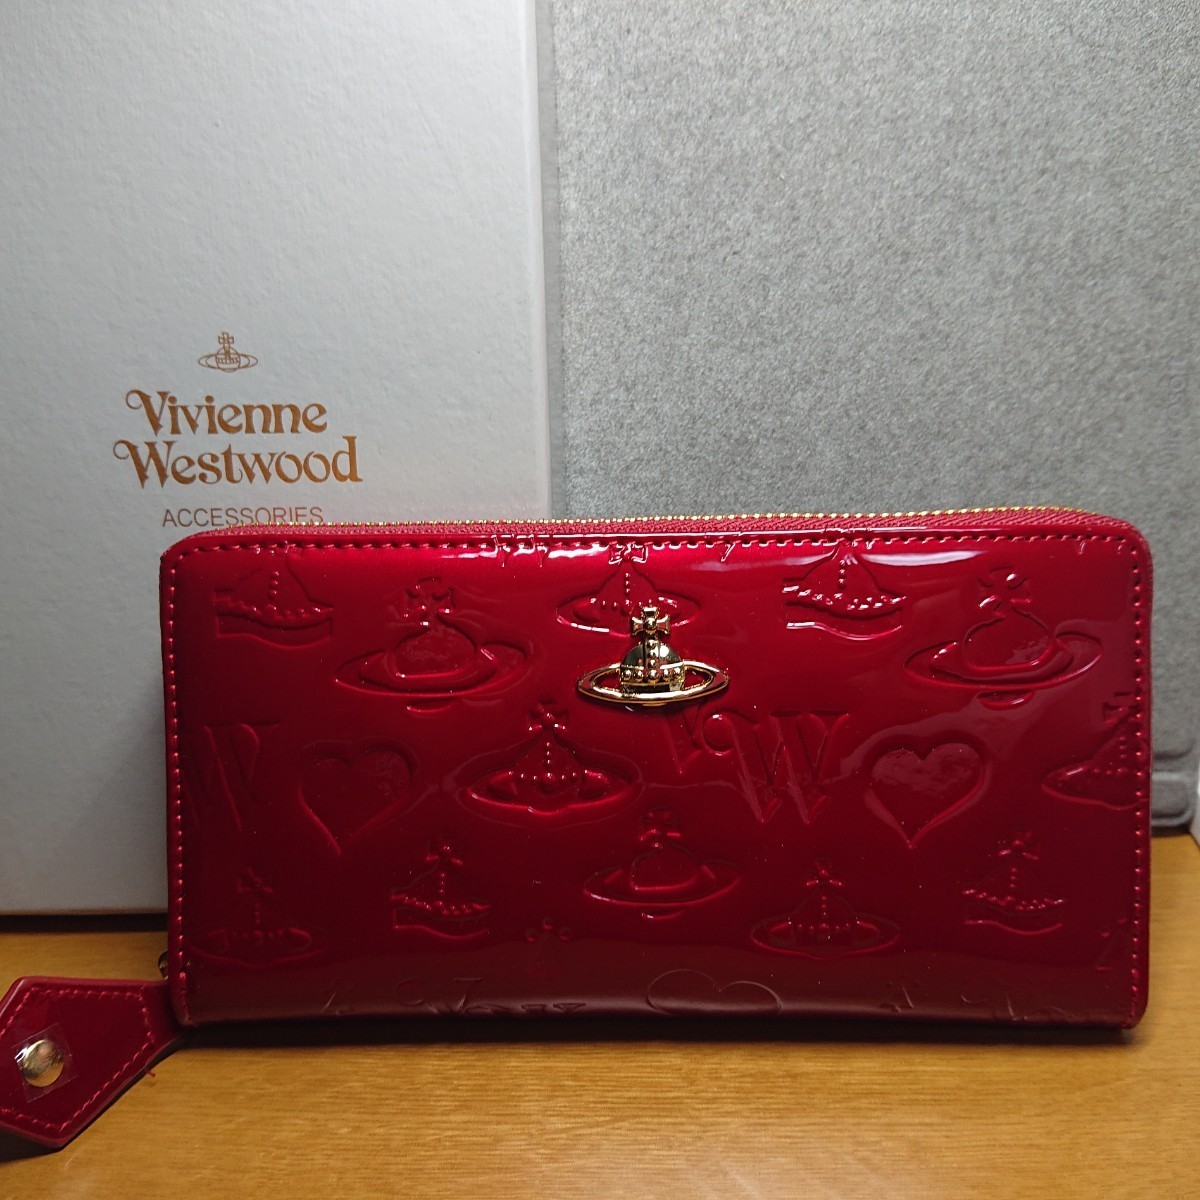 Vivienne Westwood 長財布 ヴィヴィアンウエストウッド レッド 赤 レディース財布